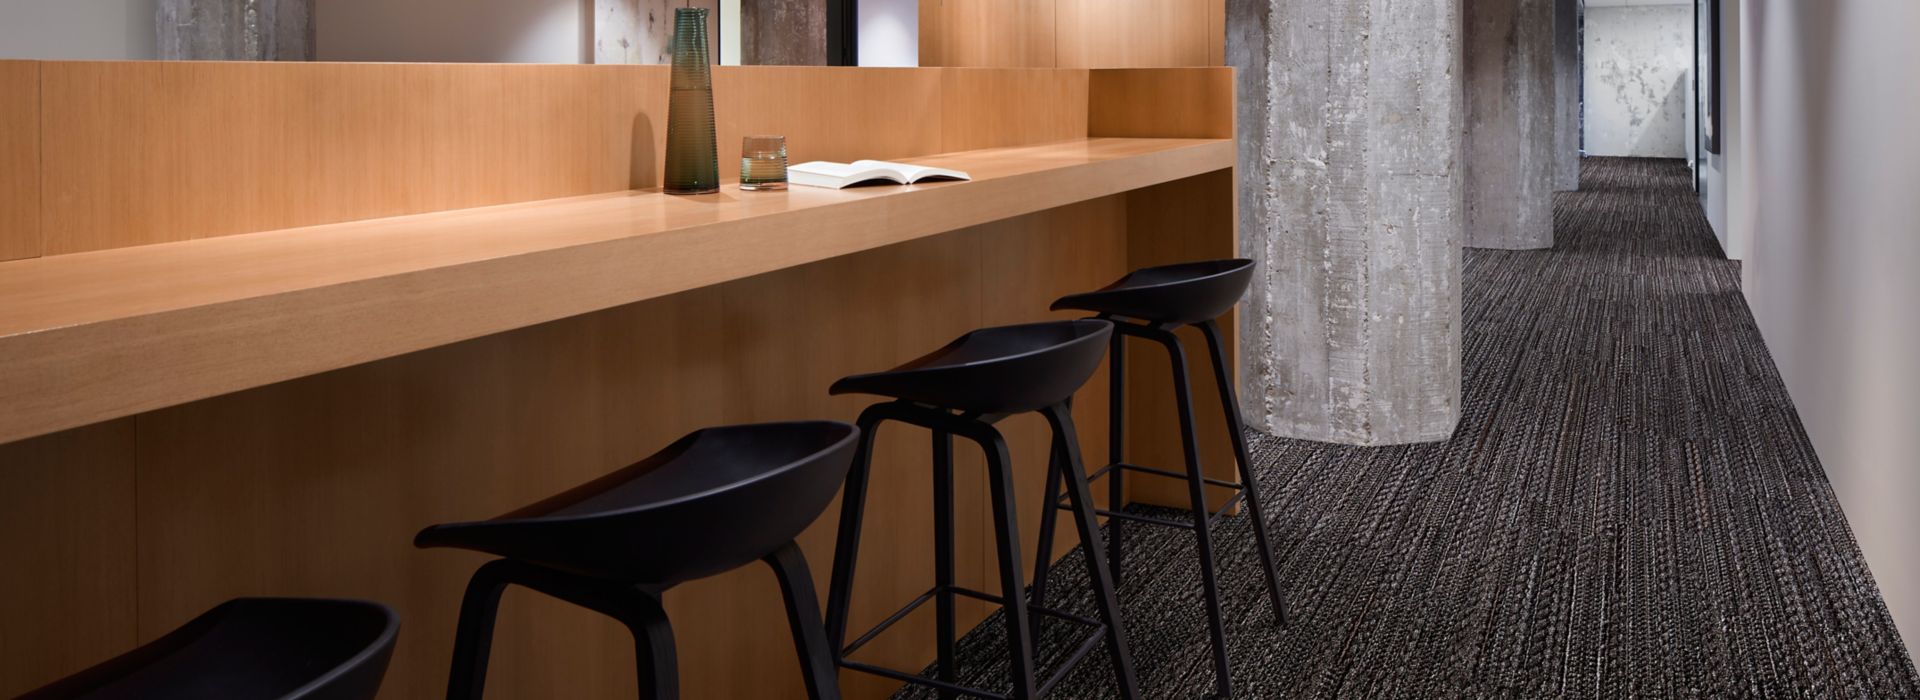 Interface E614 plank carpet tile in workspace cafe area